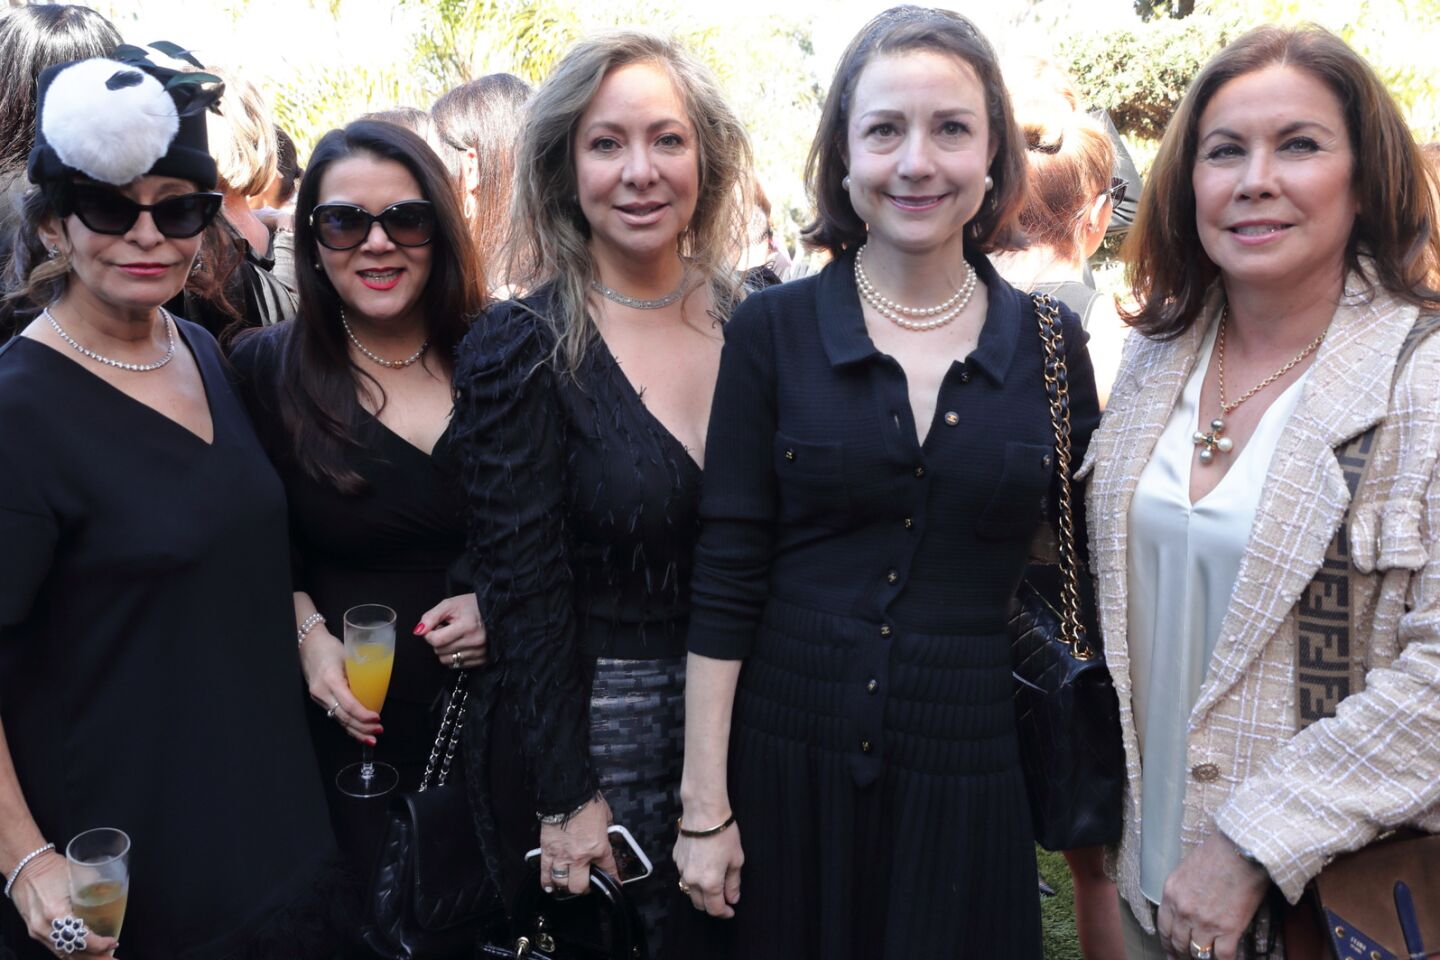 Elisa Jaime, Alba Aceves, Giovanna Ruiz, Natalia Gonzalez, Fernanda Vildosola